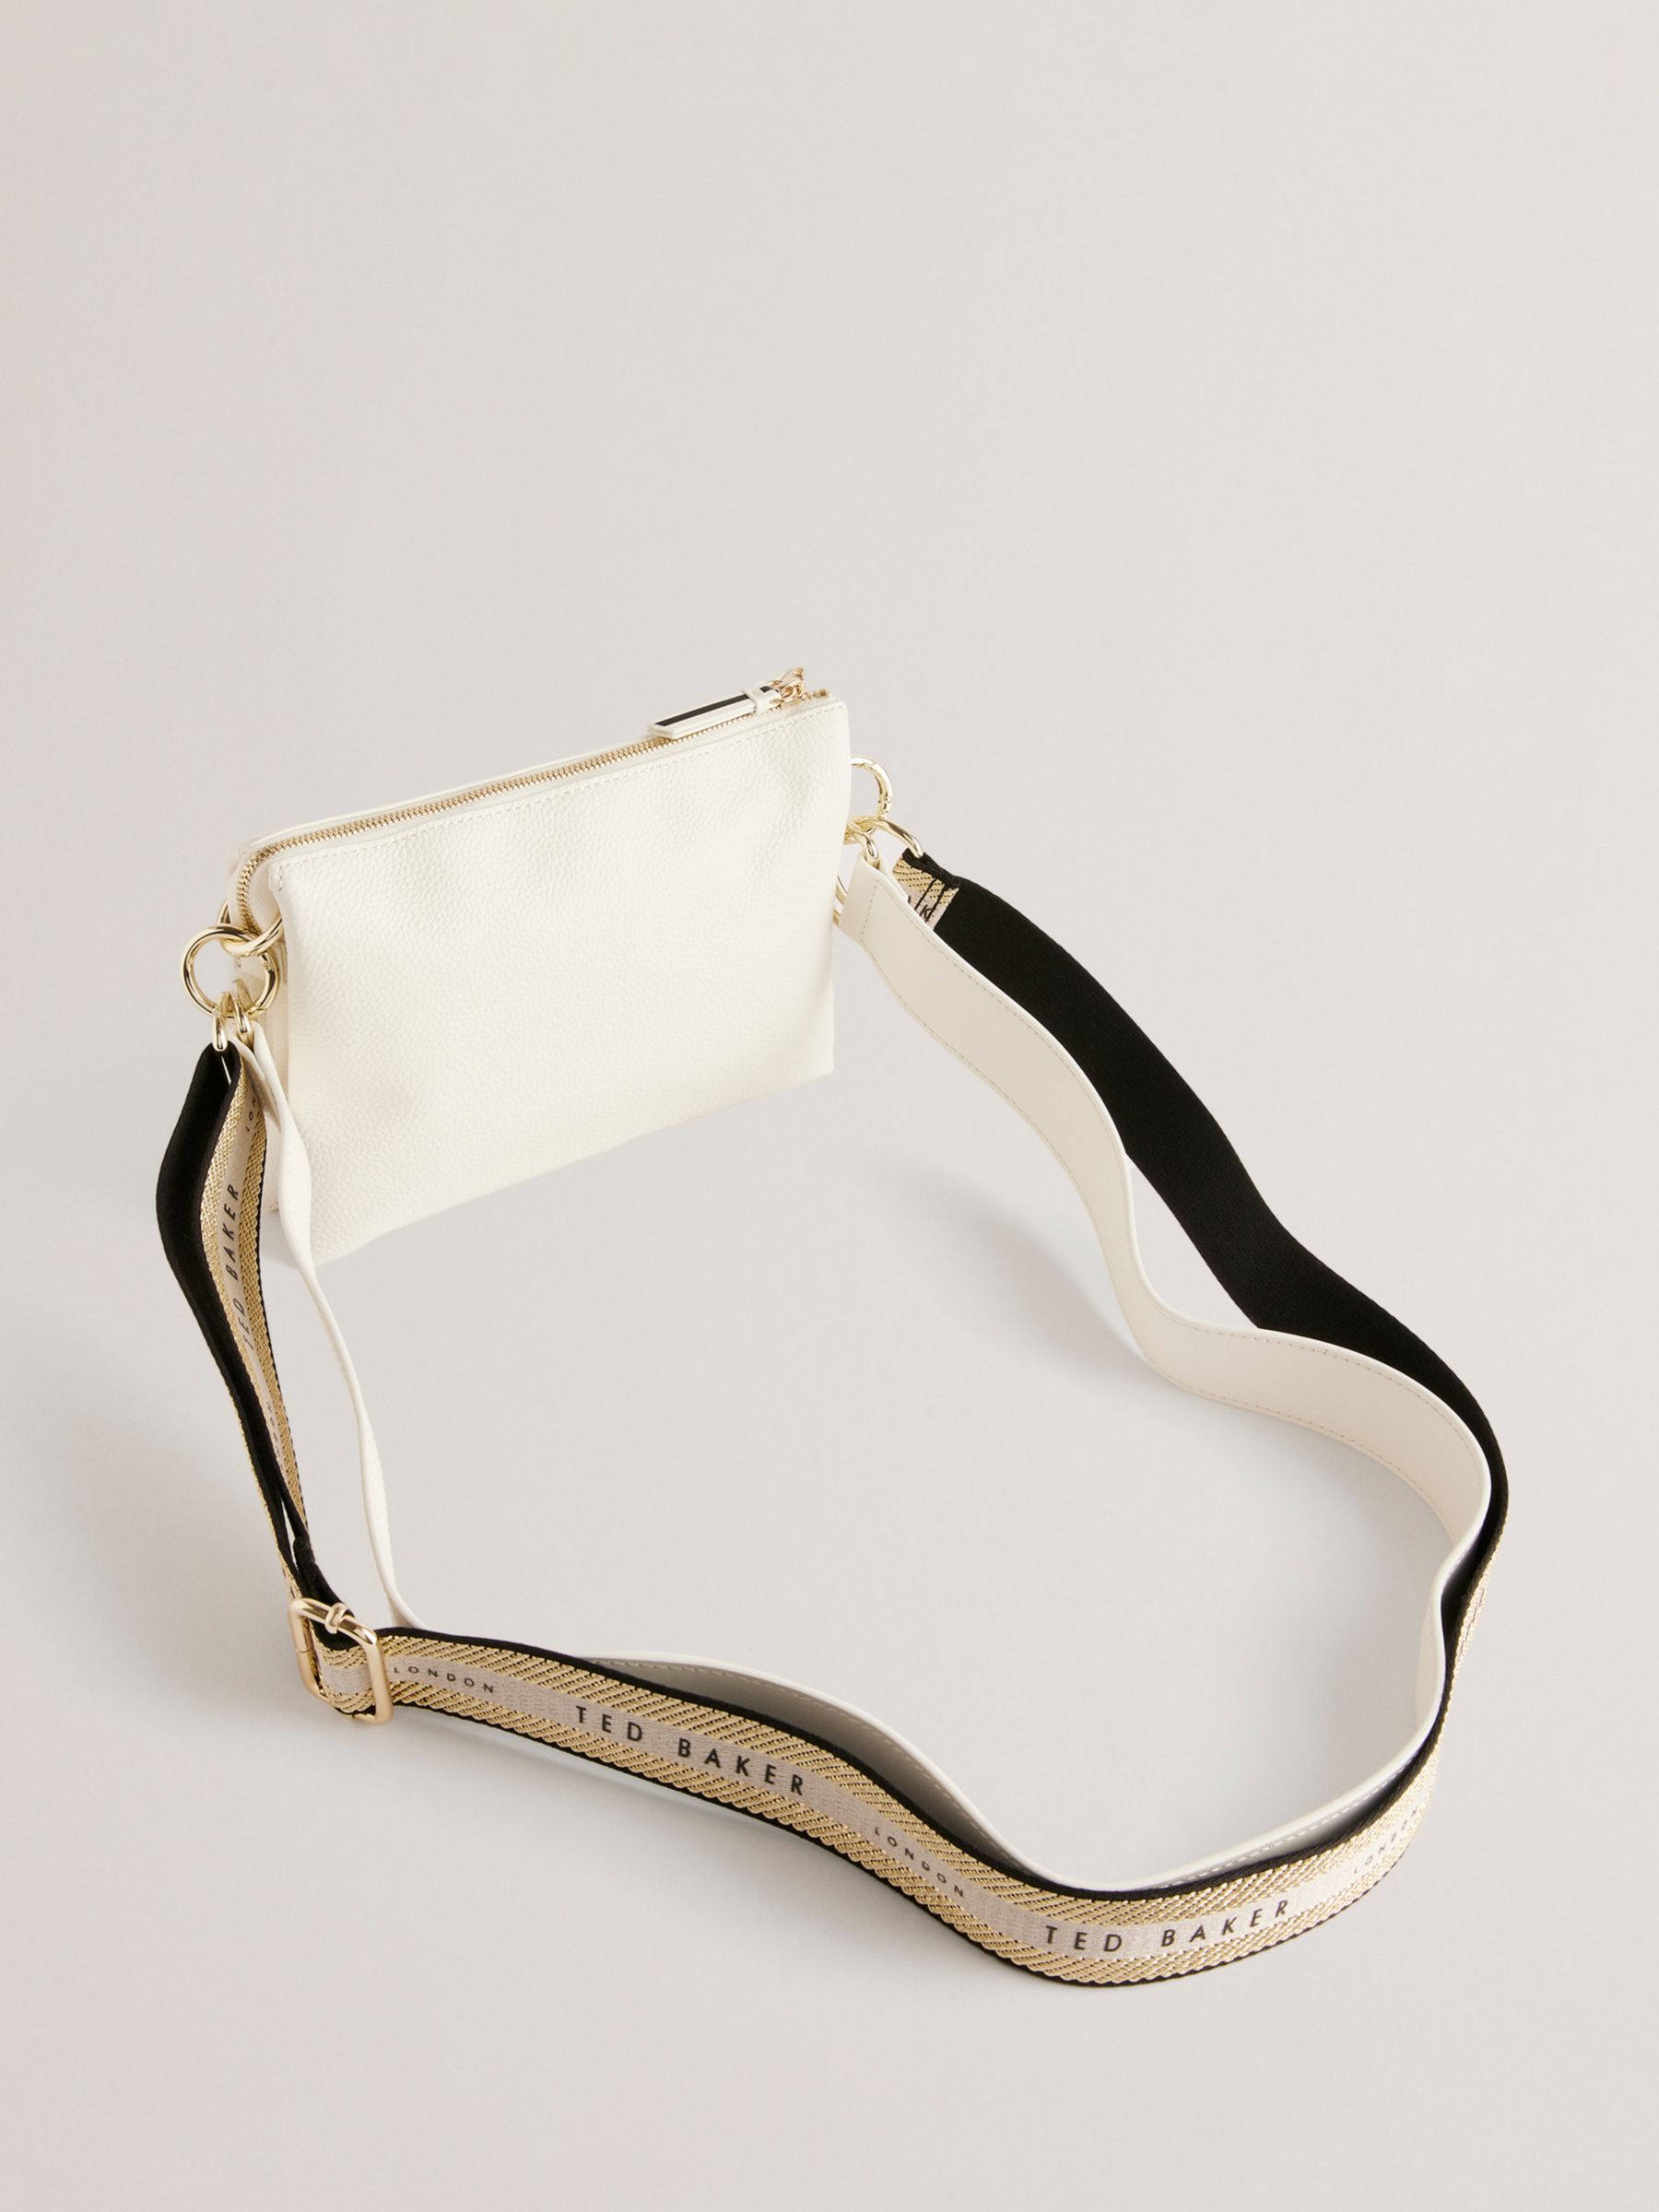 Ted Baker Delphia Branded Webbing Cross Body Bag, White, One Size